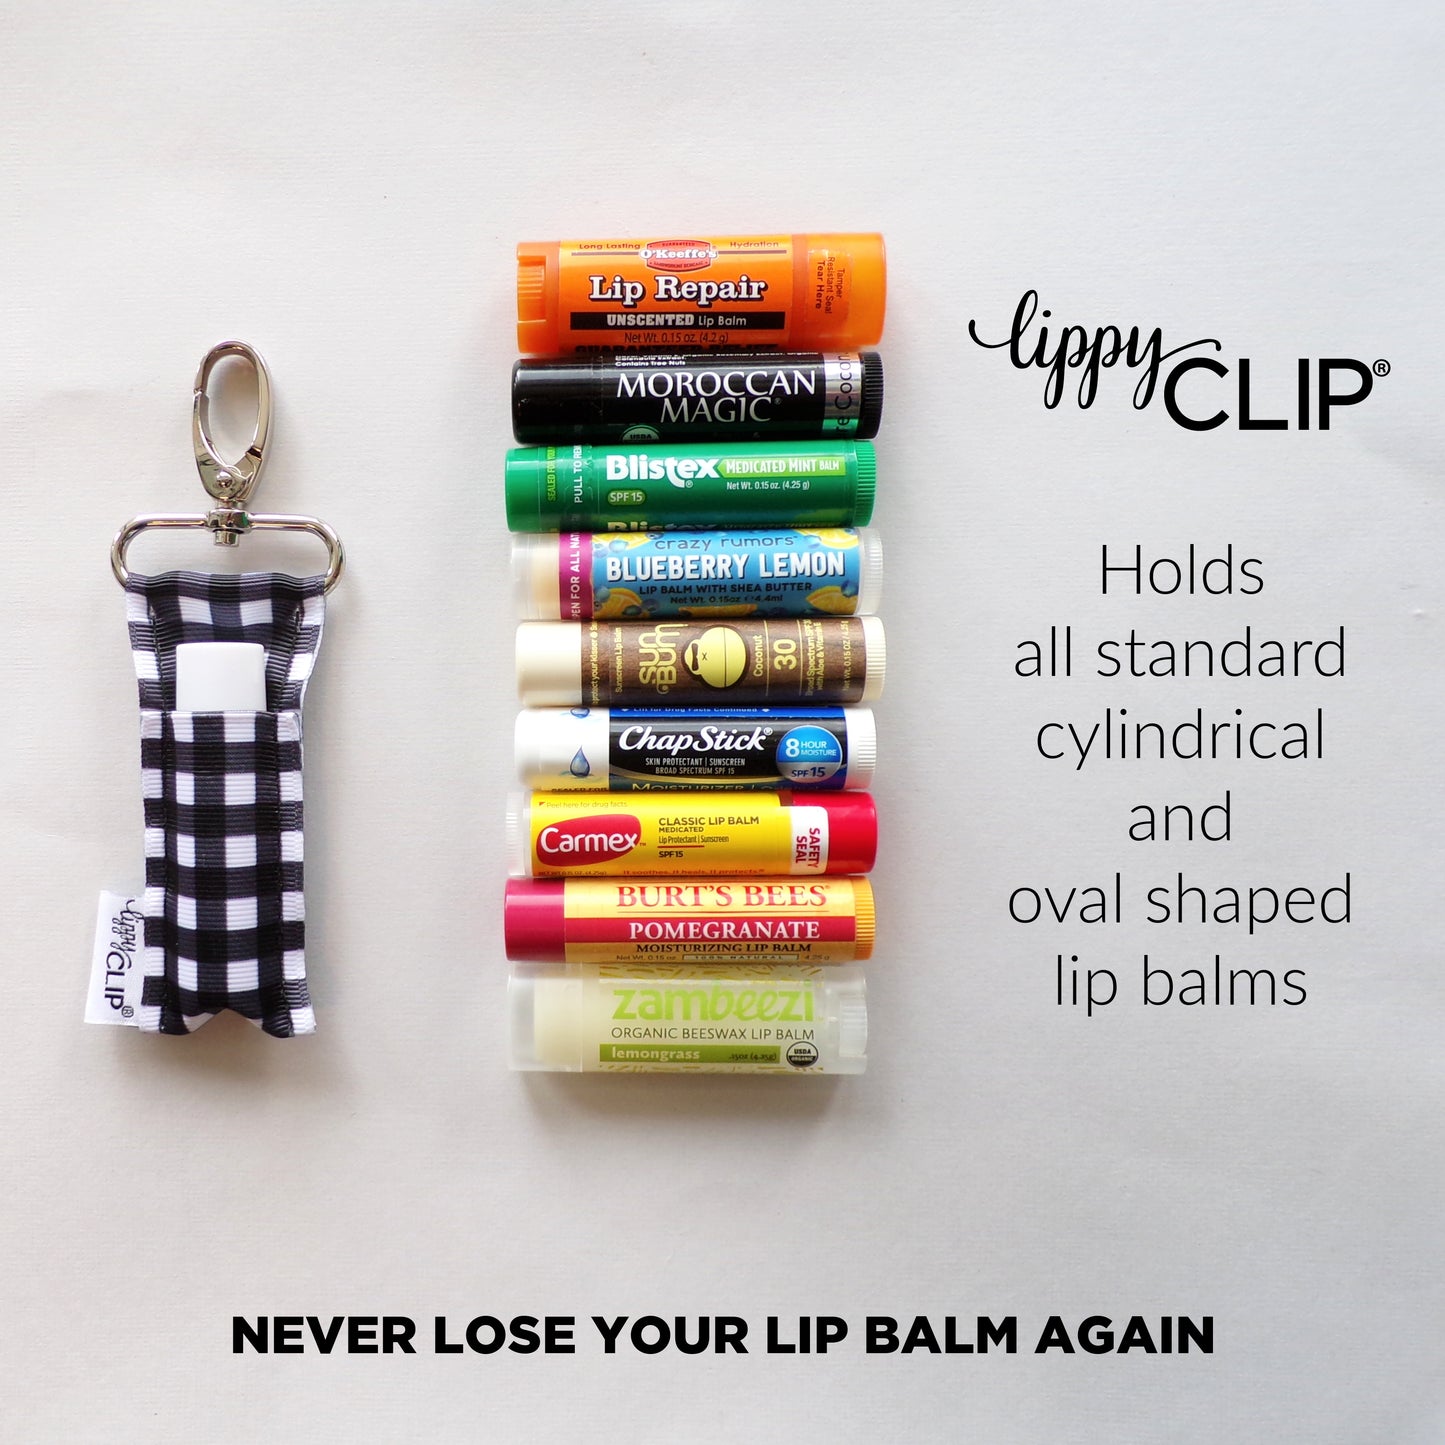 Red Dragons LippyClip® Lip Balm Holder